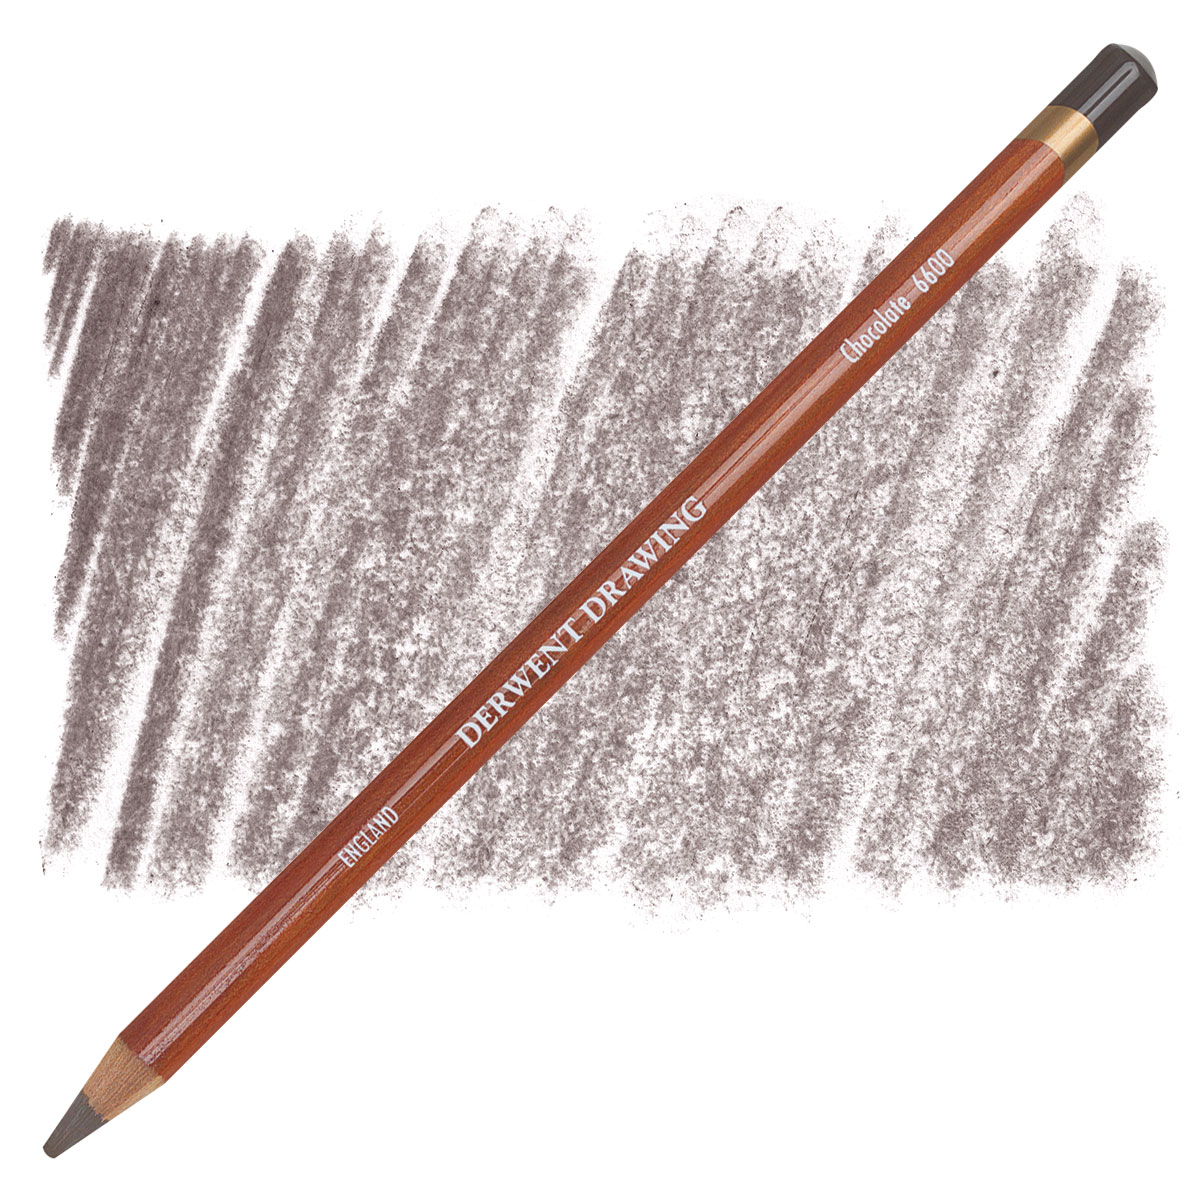 Derwent Drawing Pencil - Chocolate